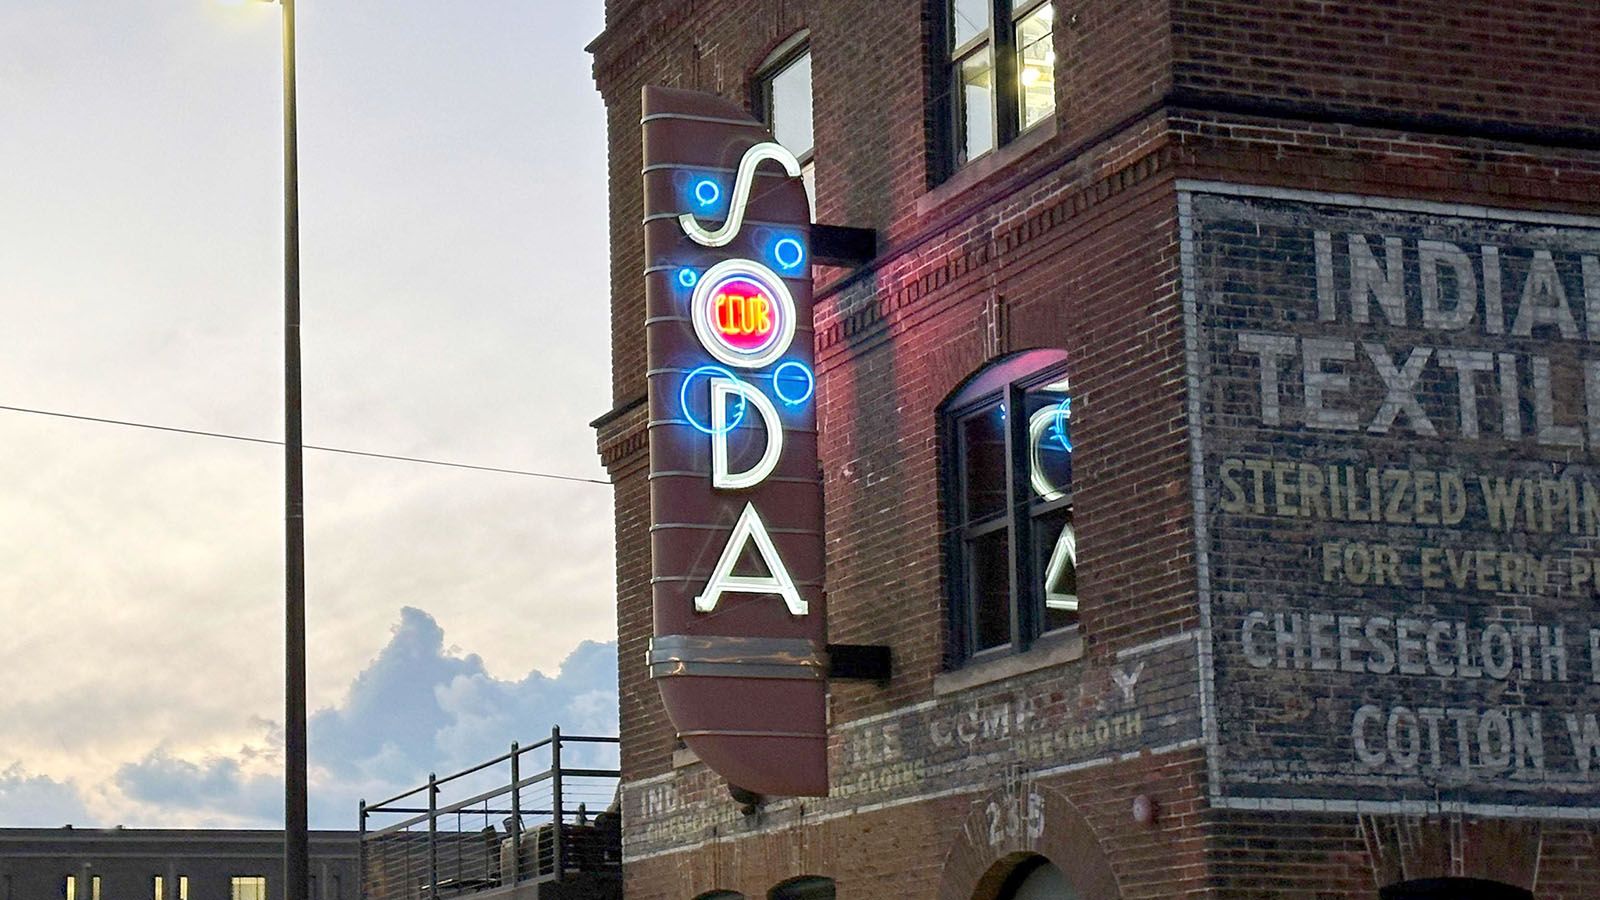 Club Soda will mark its 25th anniversary with three nights of music.